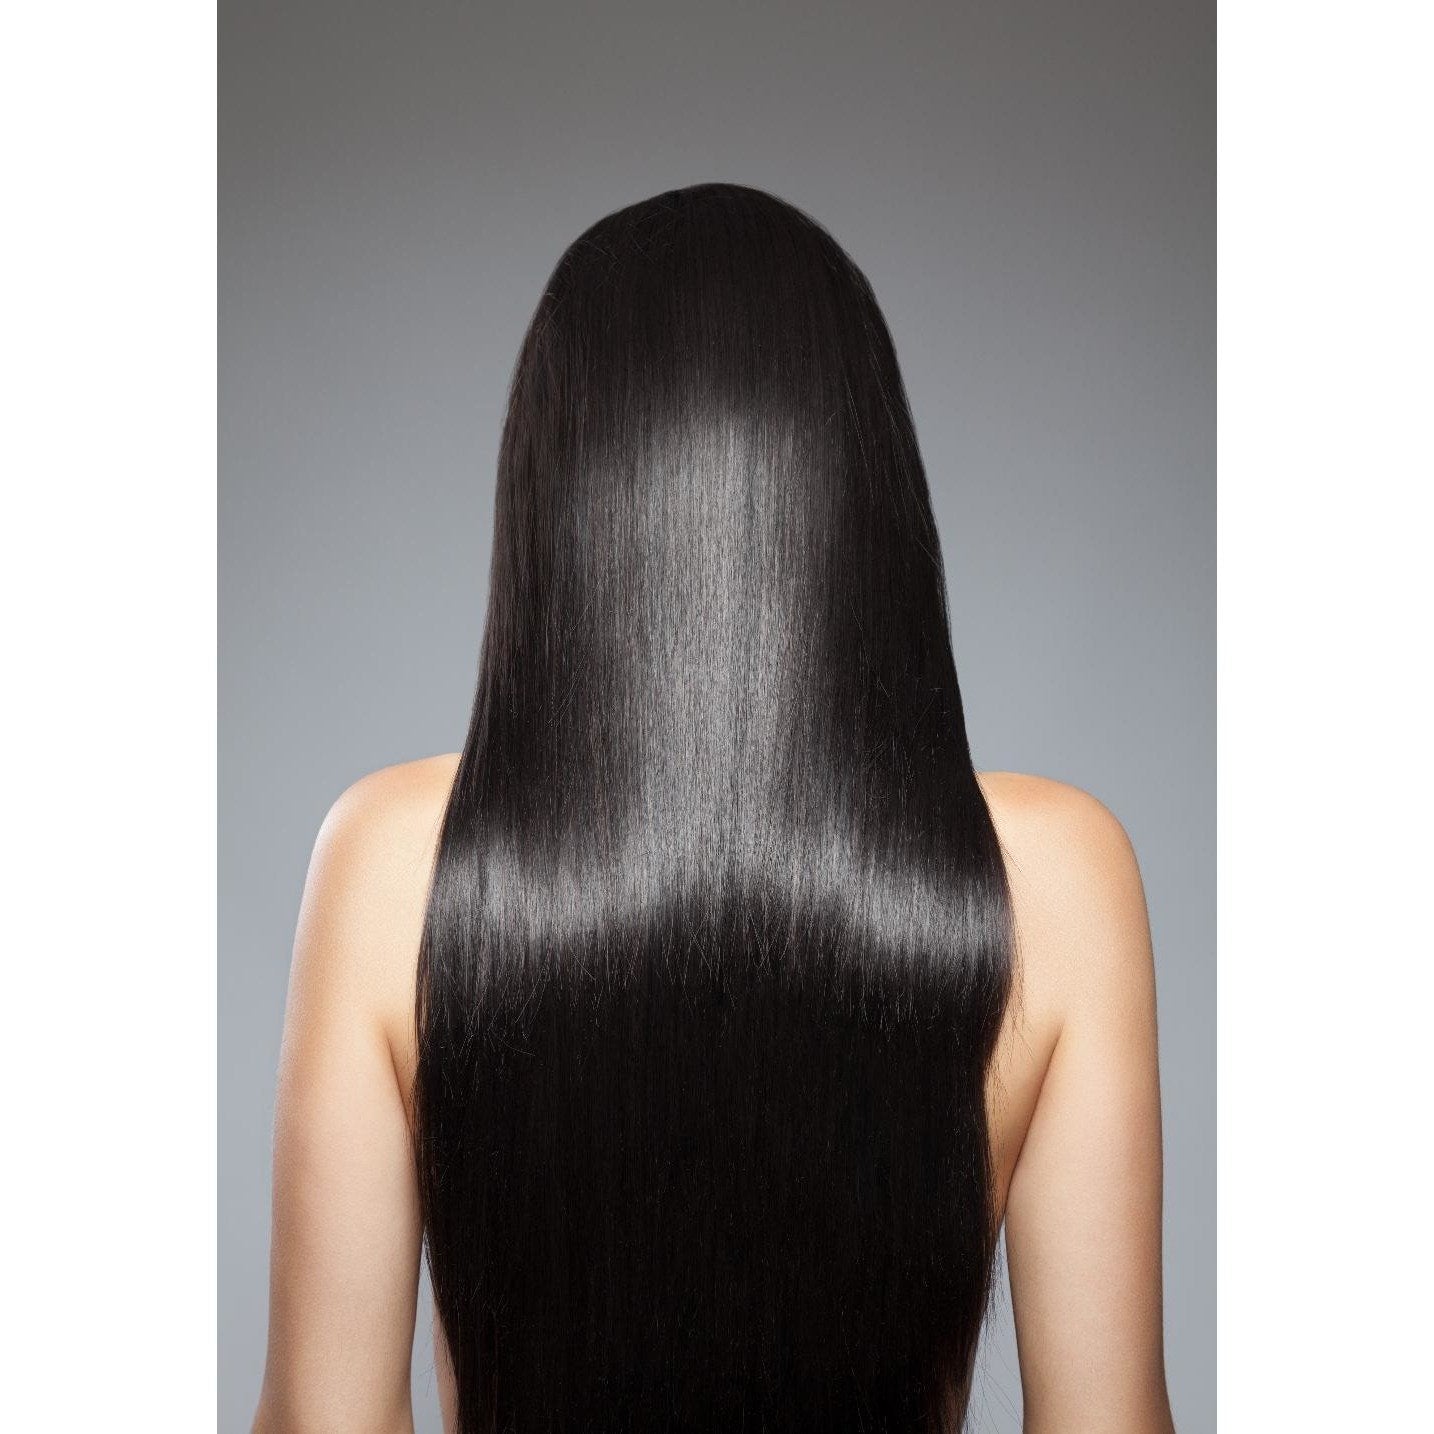 Mink Hair -  Virgin Hair ( 100% Full Cuticle Virgin Hair ) - Straight